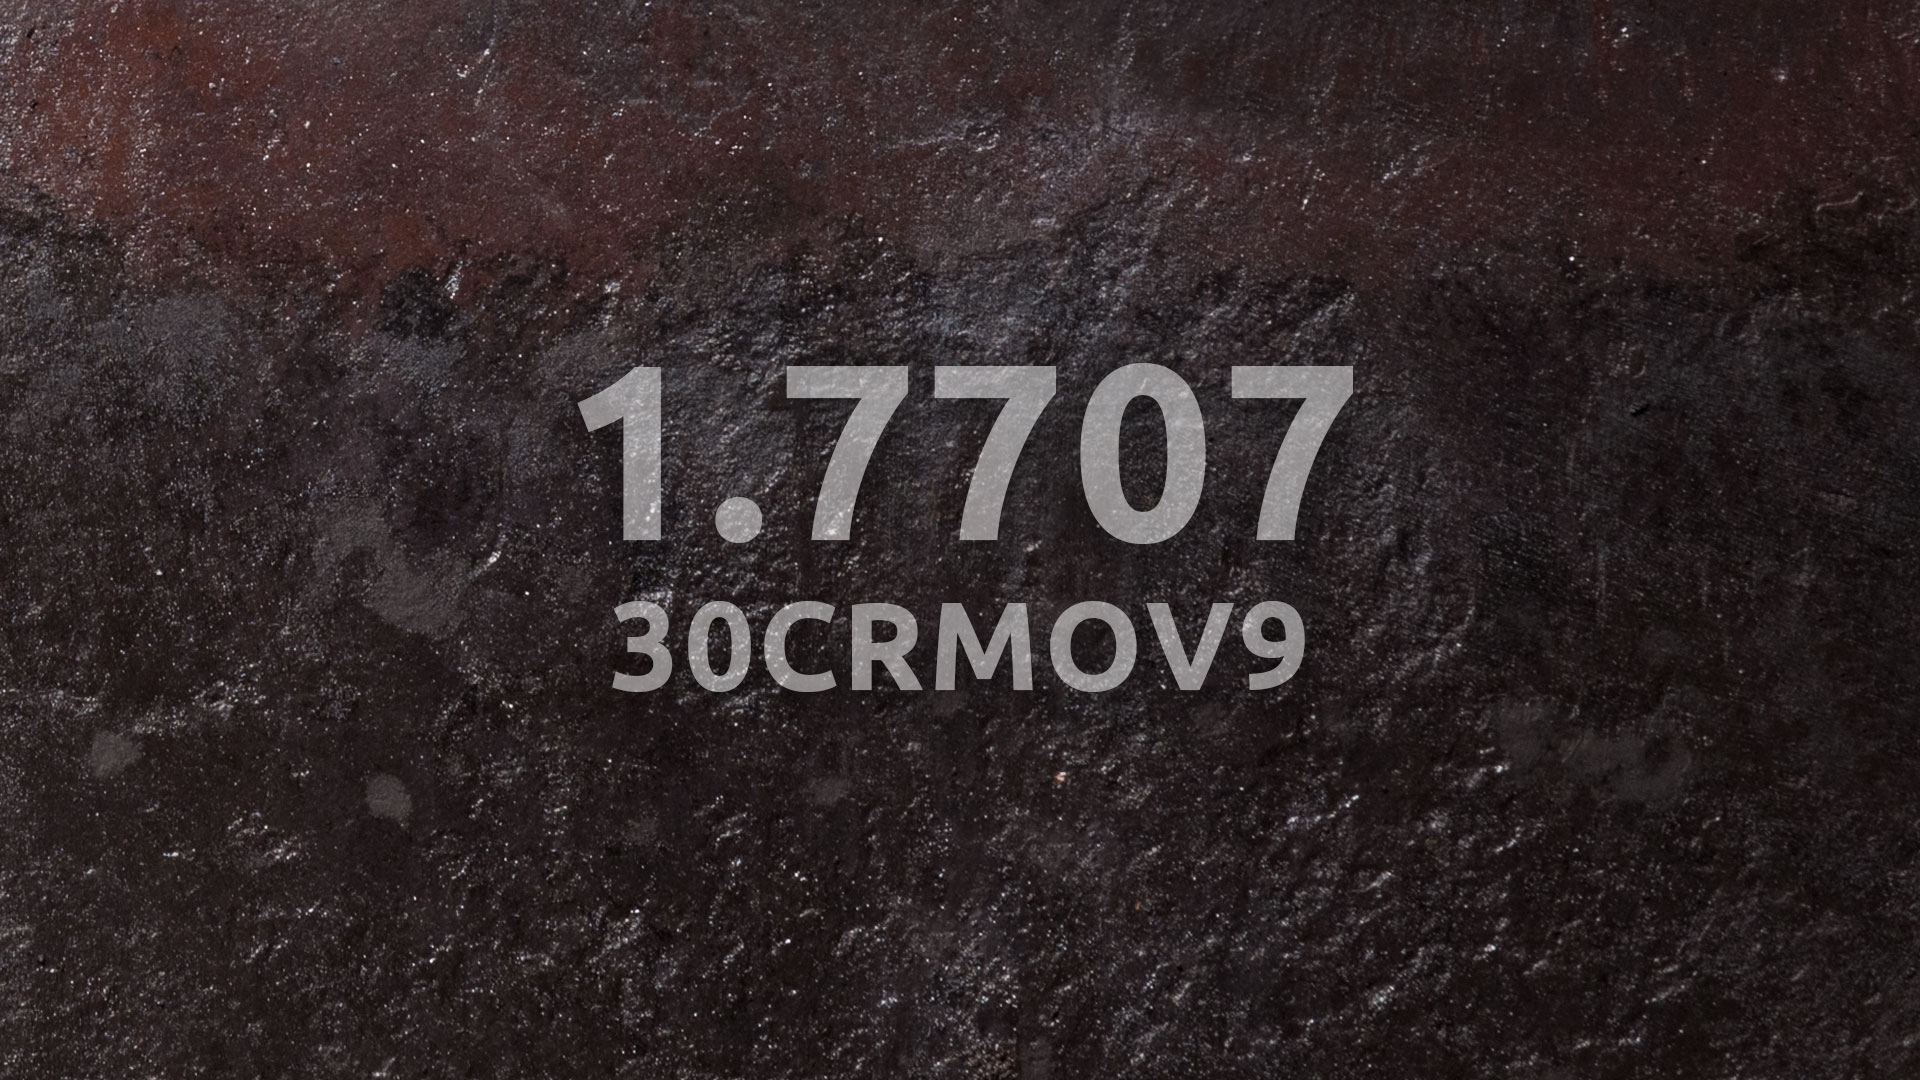 1.7707 – 30CrMoV9